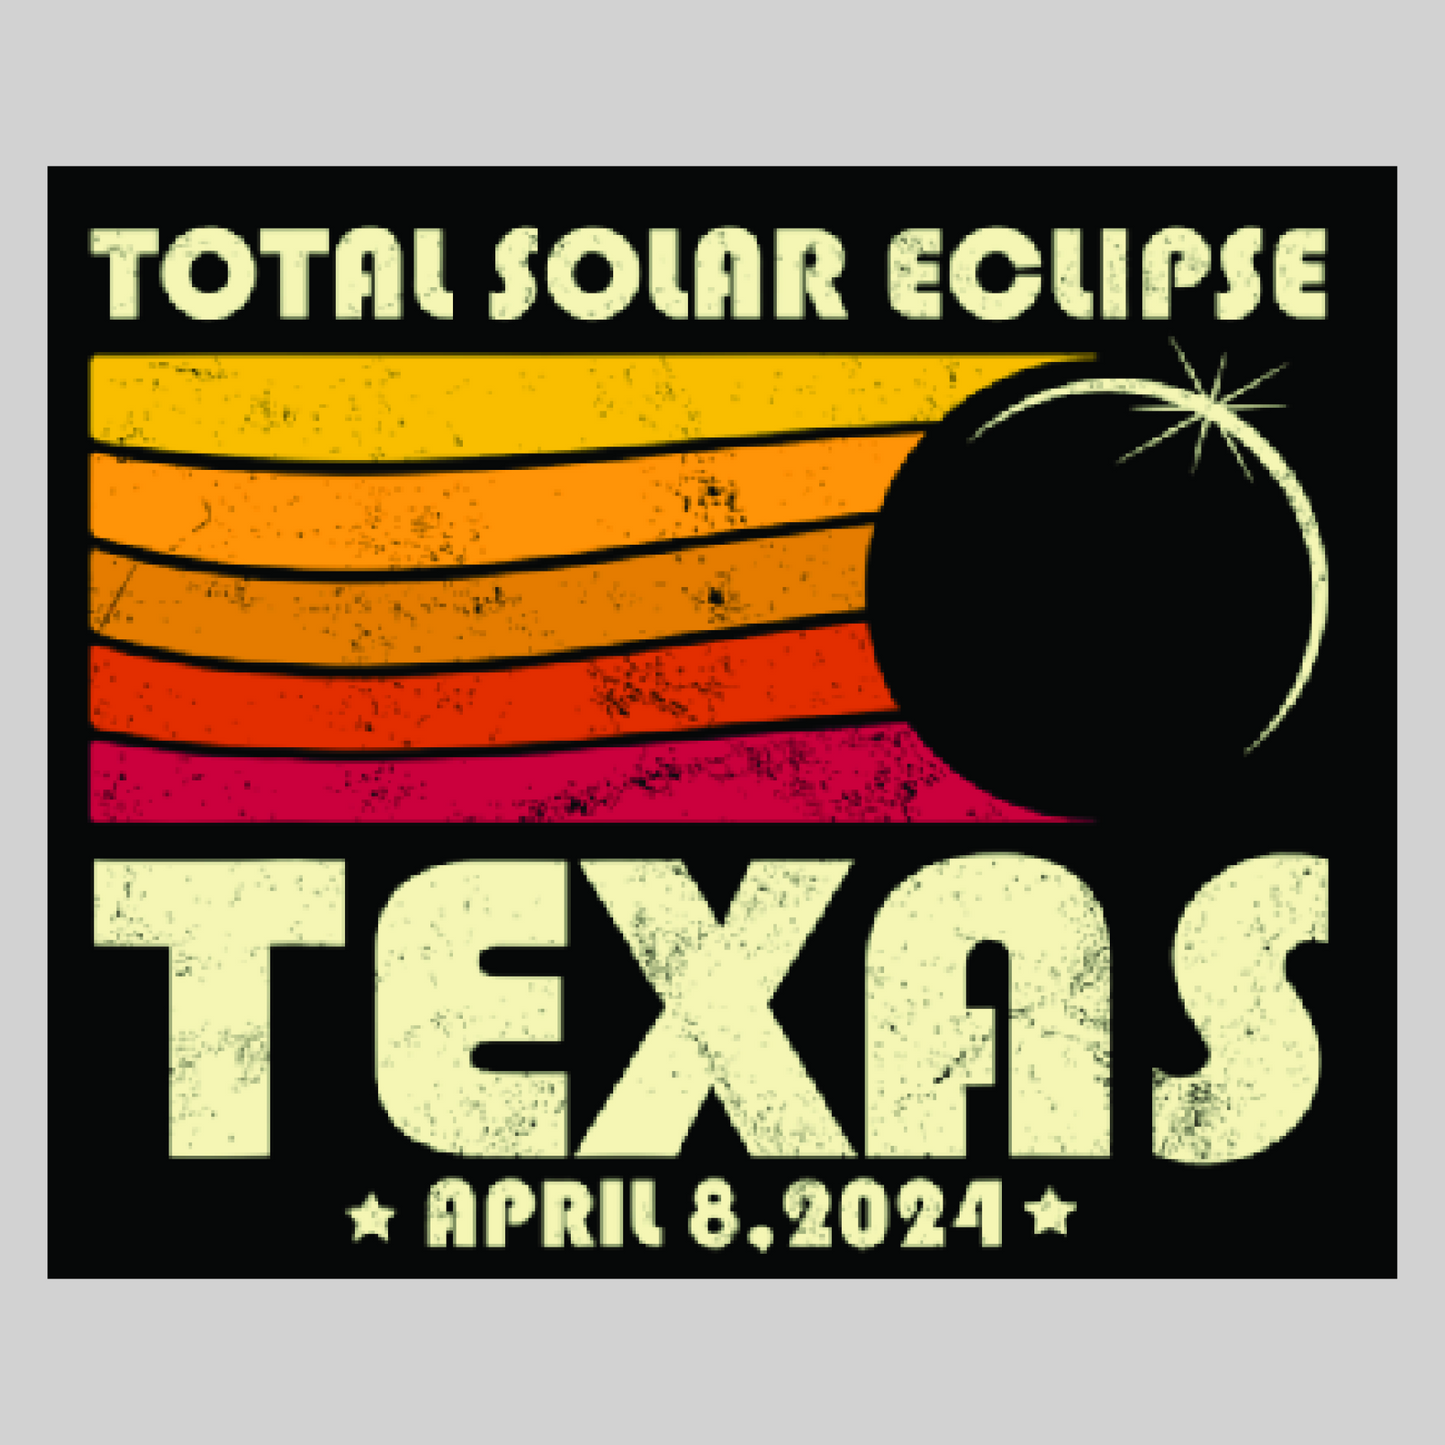 Solar Eclipse Day T-Shirt